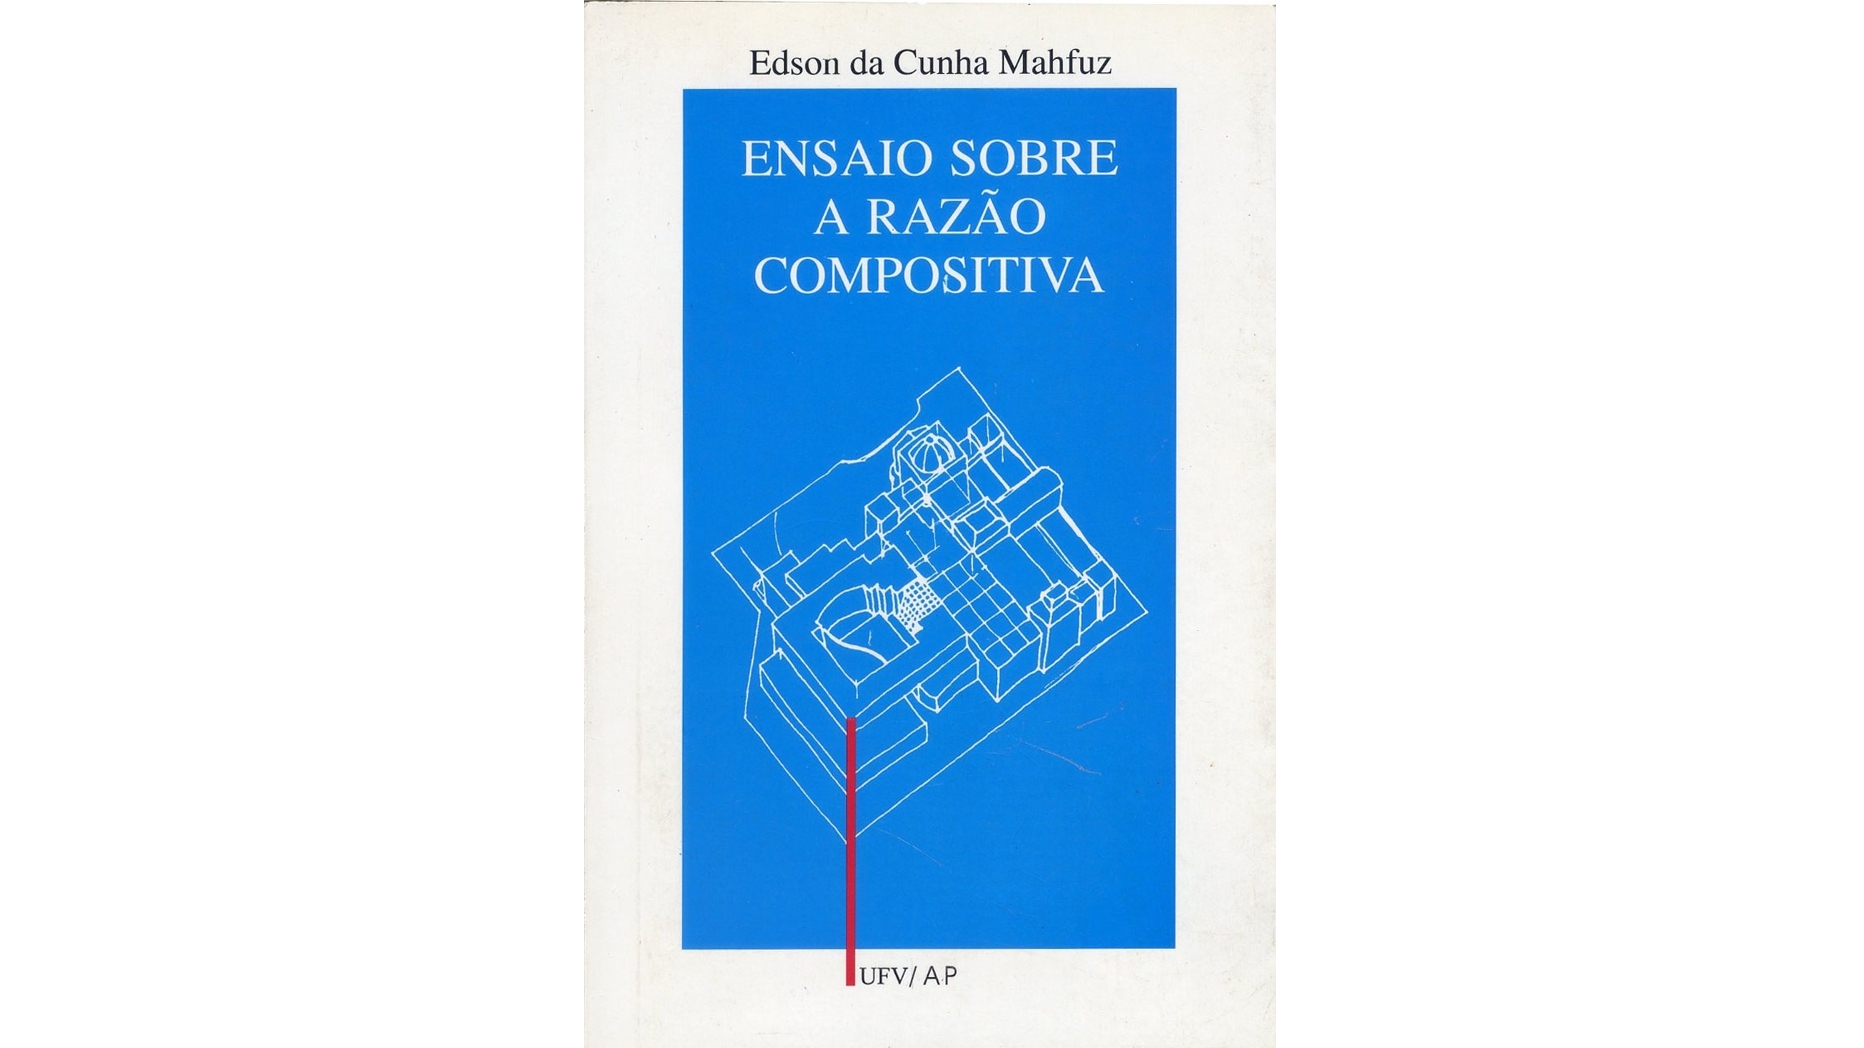 Edson da Cunha Mahfuz book cover